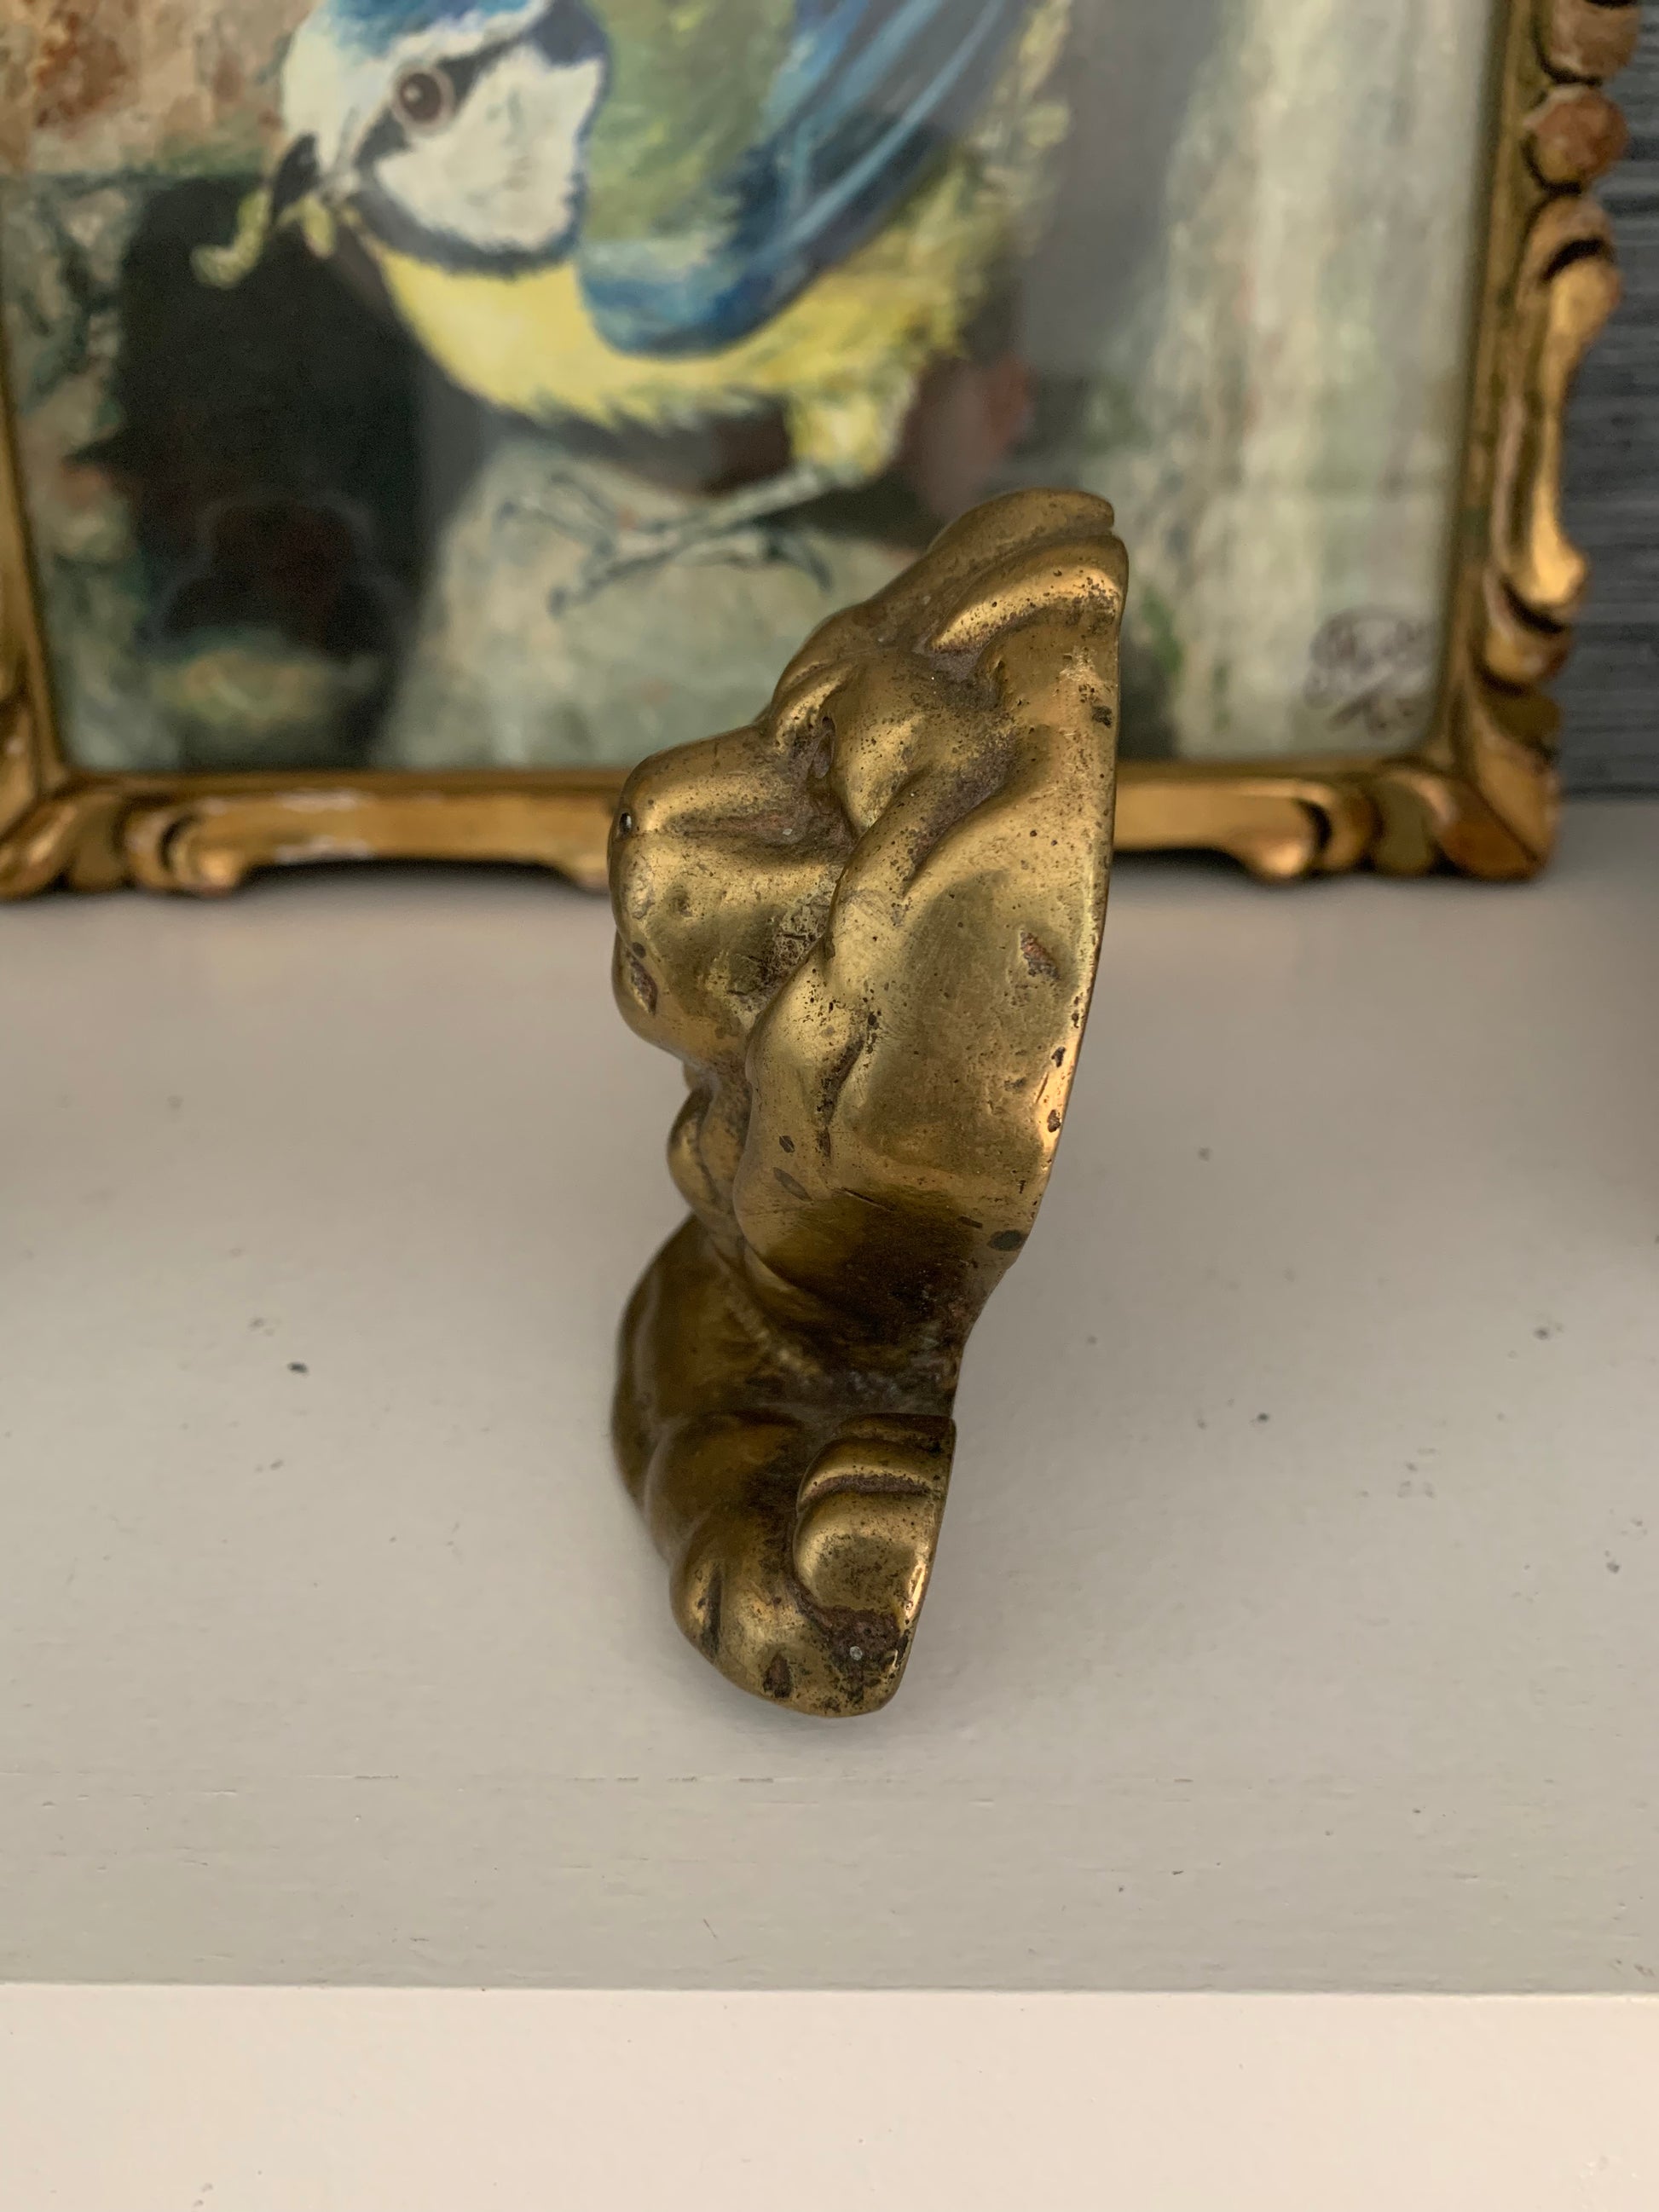 Vintage Brass Deer Figure